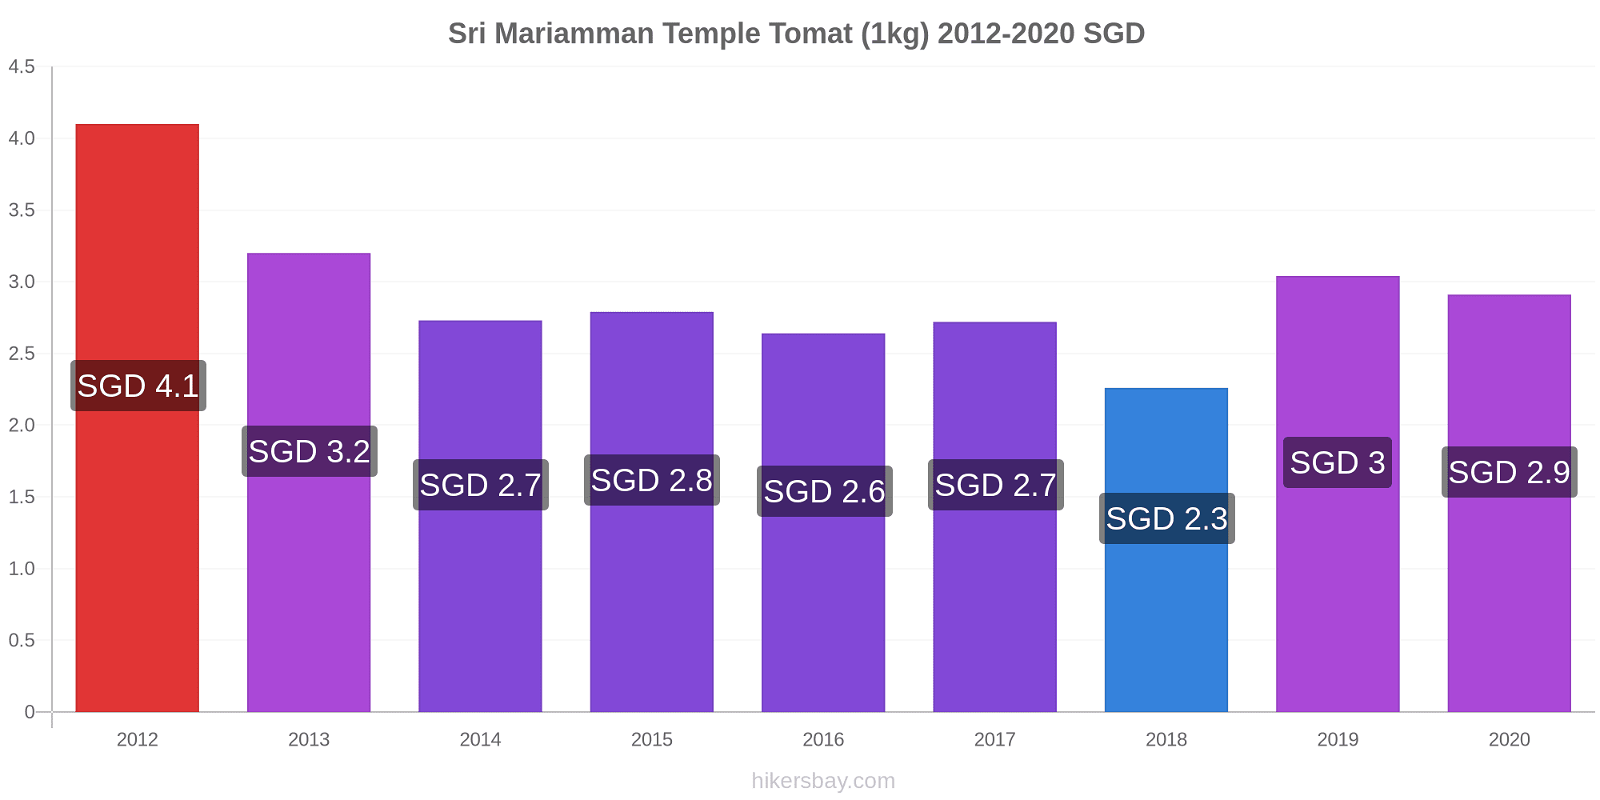 Sri Mariamman Temple perubahan harga Tomat (1kg) hikersbay.com